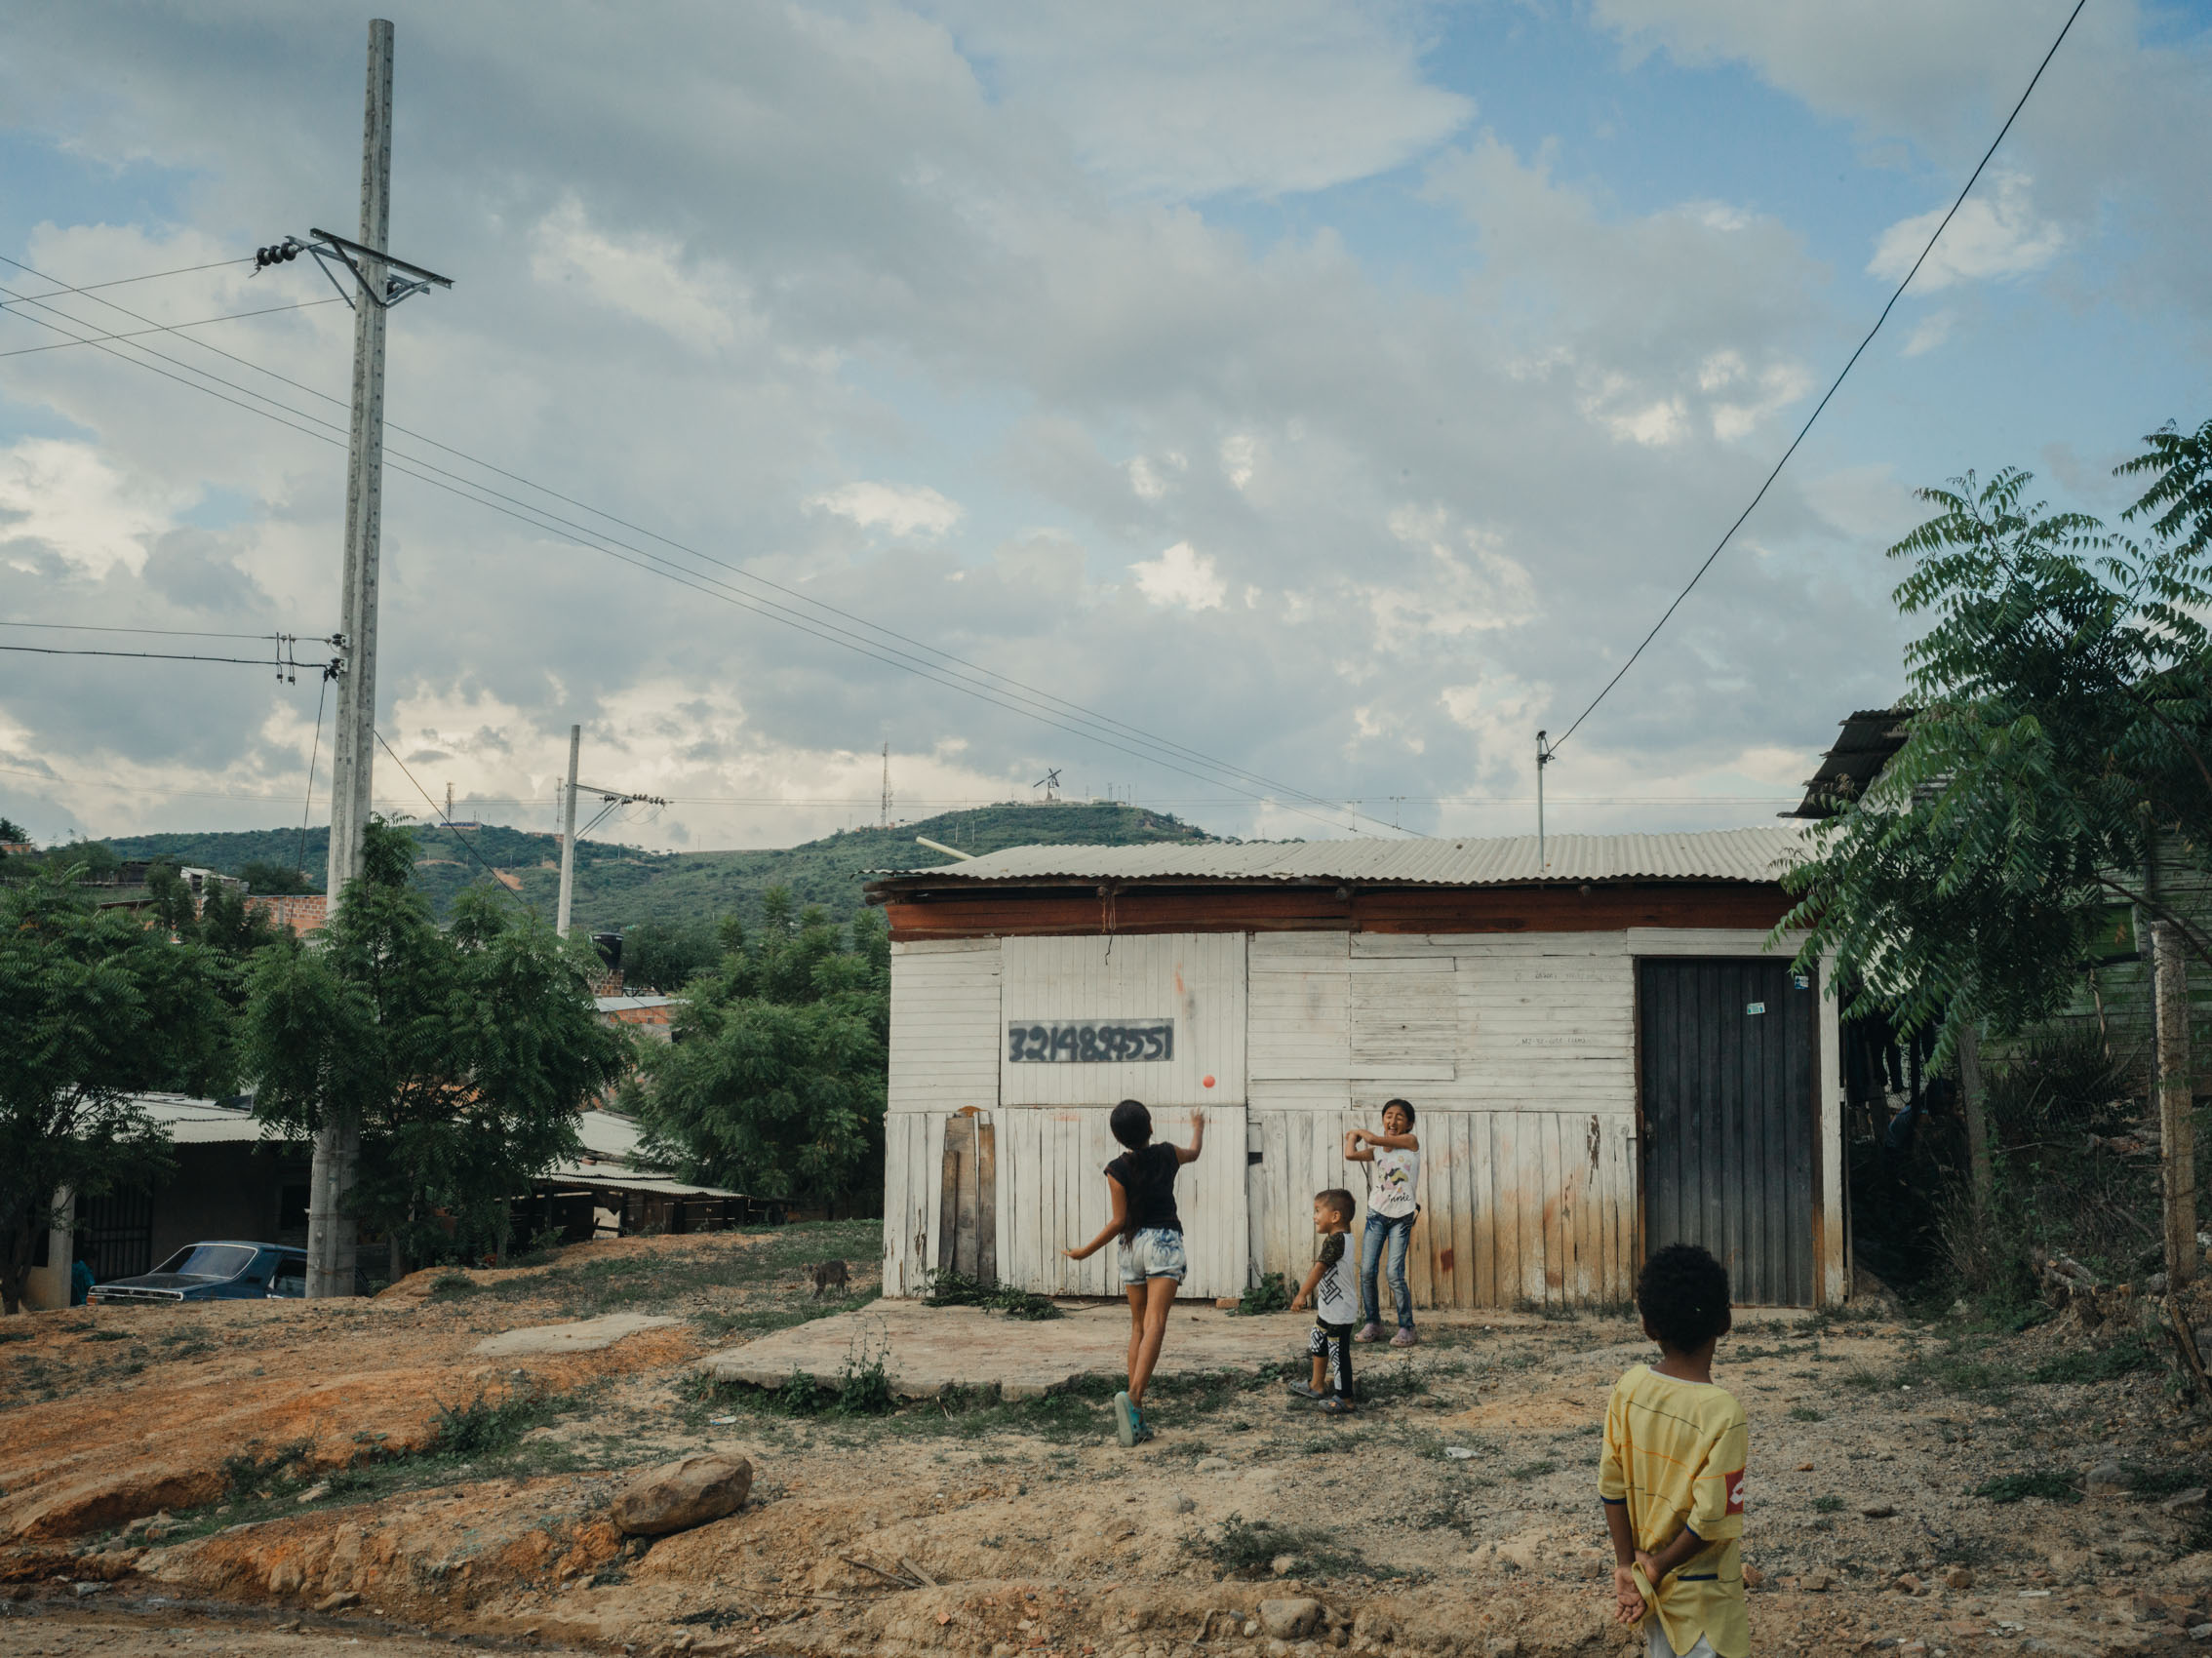 kids playing ball near homes in migrant neighborhood